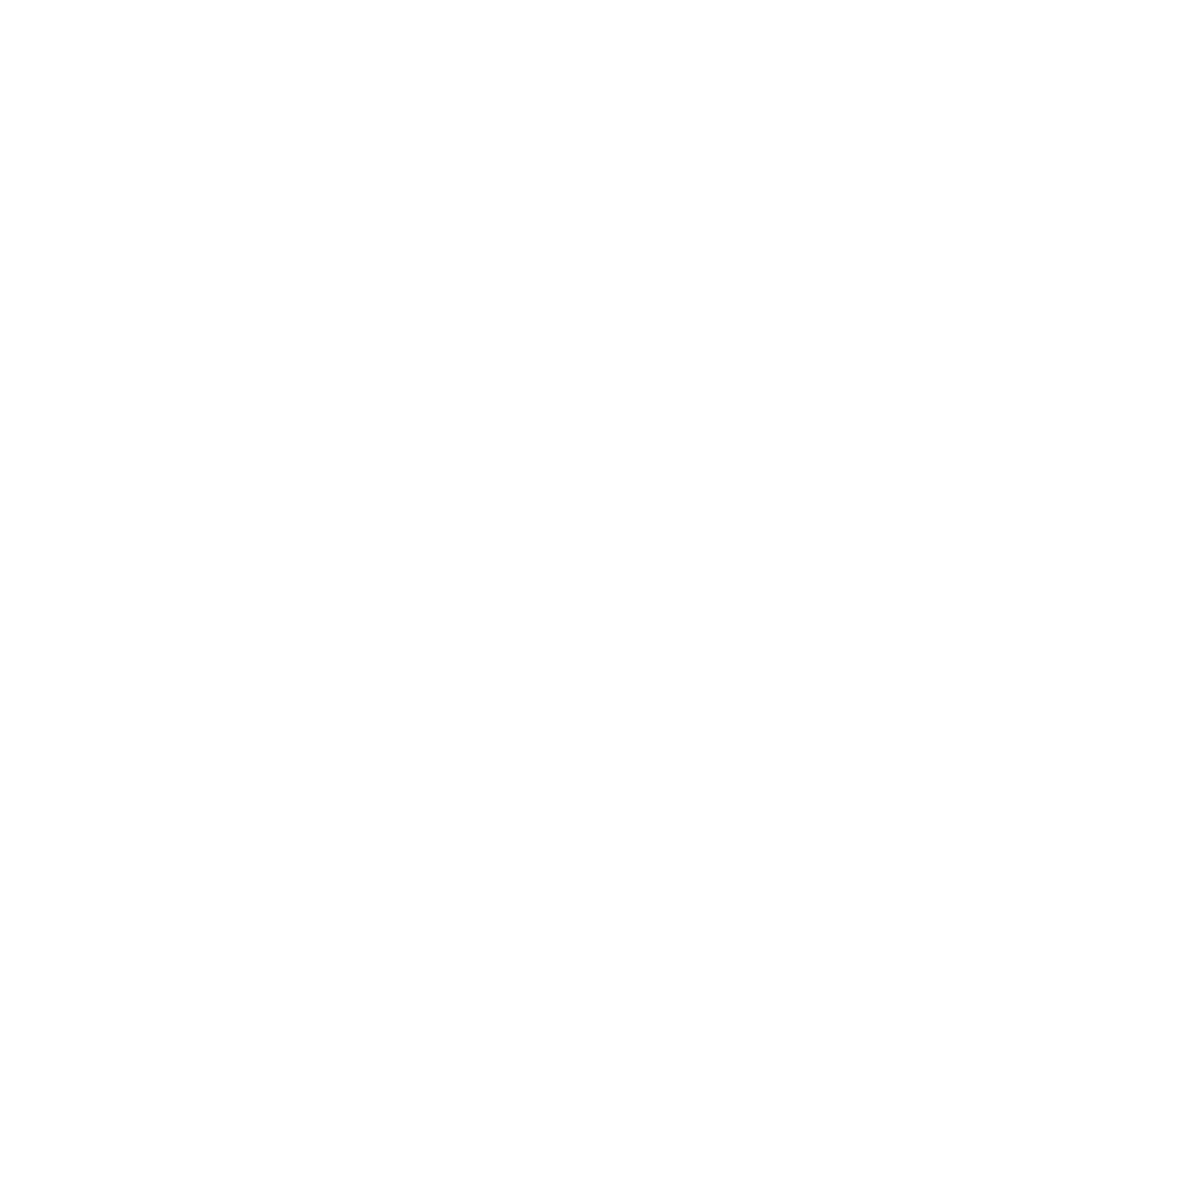 Qatar CSR Summit